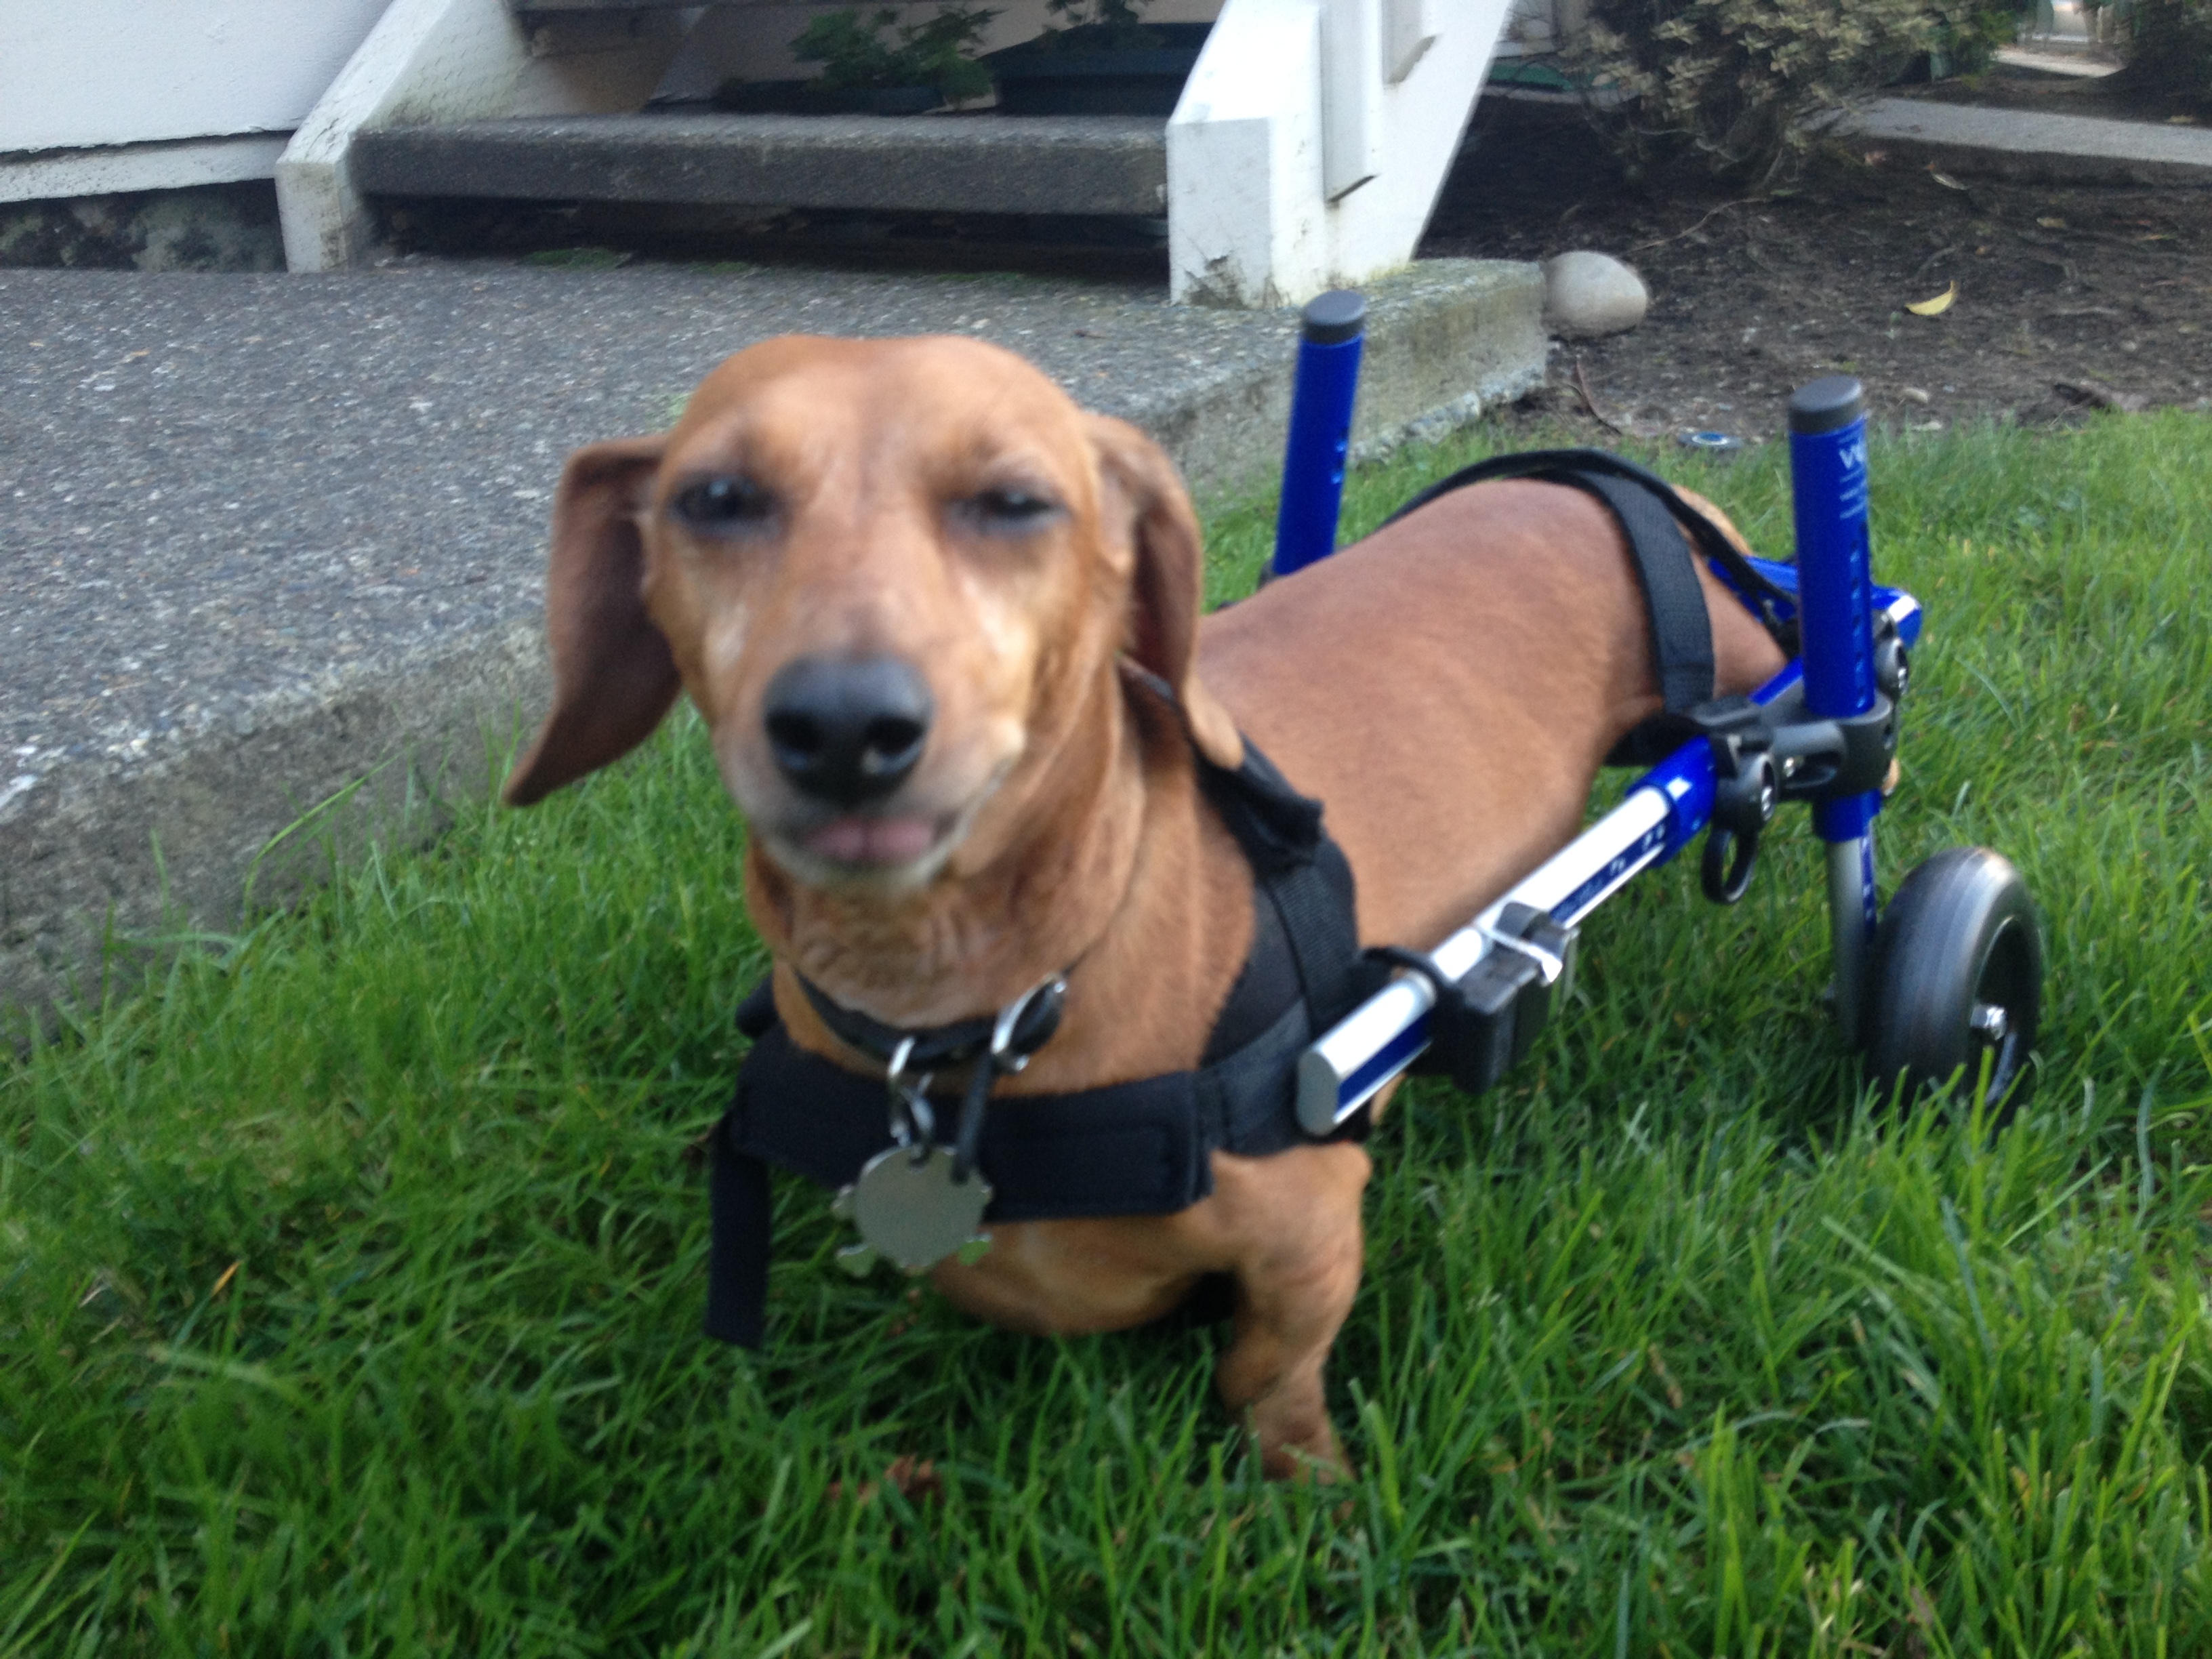 Paralyzed Dachshund regains mobility in Walkin' Wheels dog wheelchair